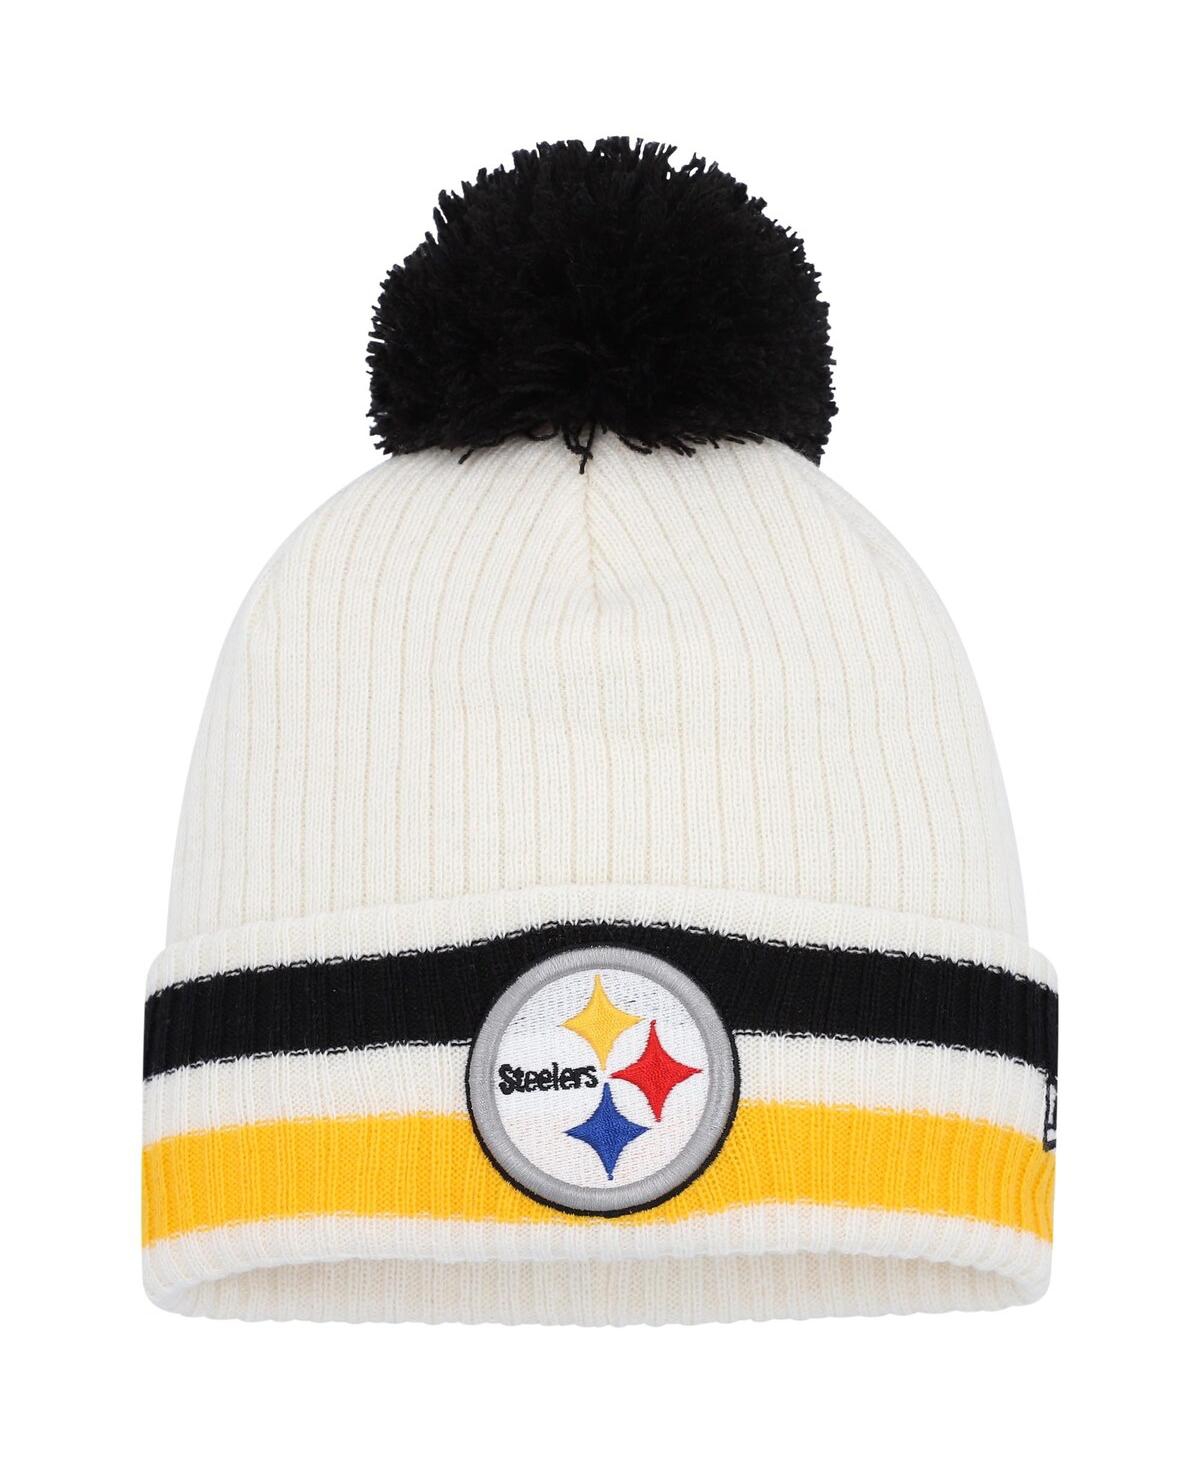 New Era Kids' Big Boys White Pittsburgh Steelers Retro Cuffed Knit Hat With Pom